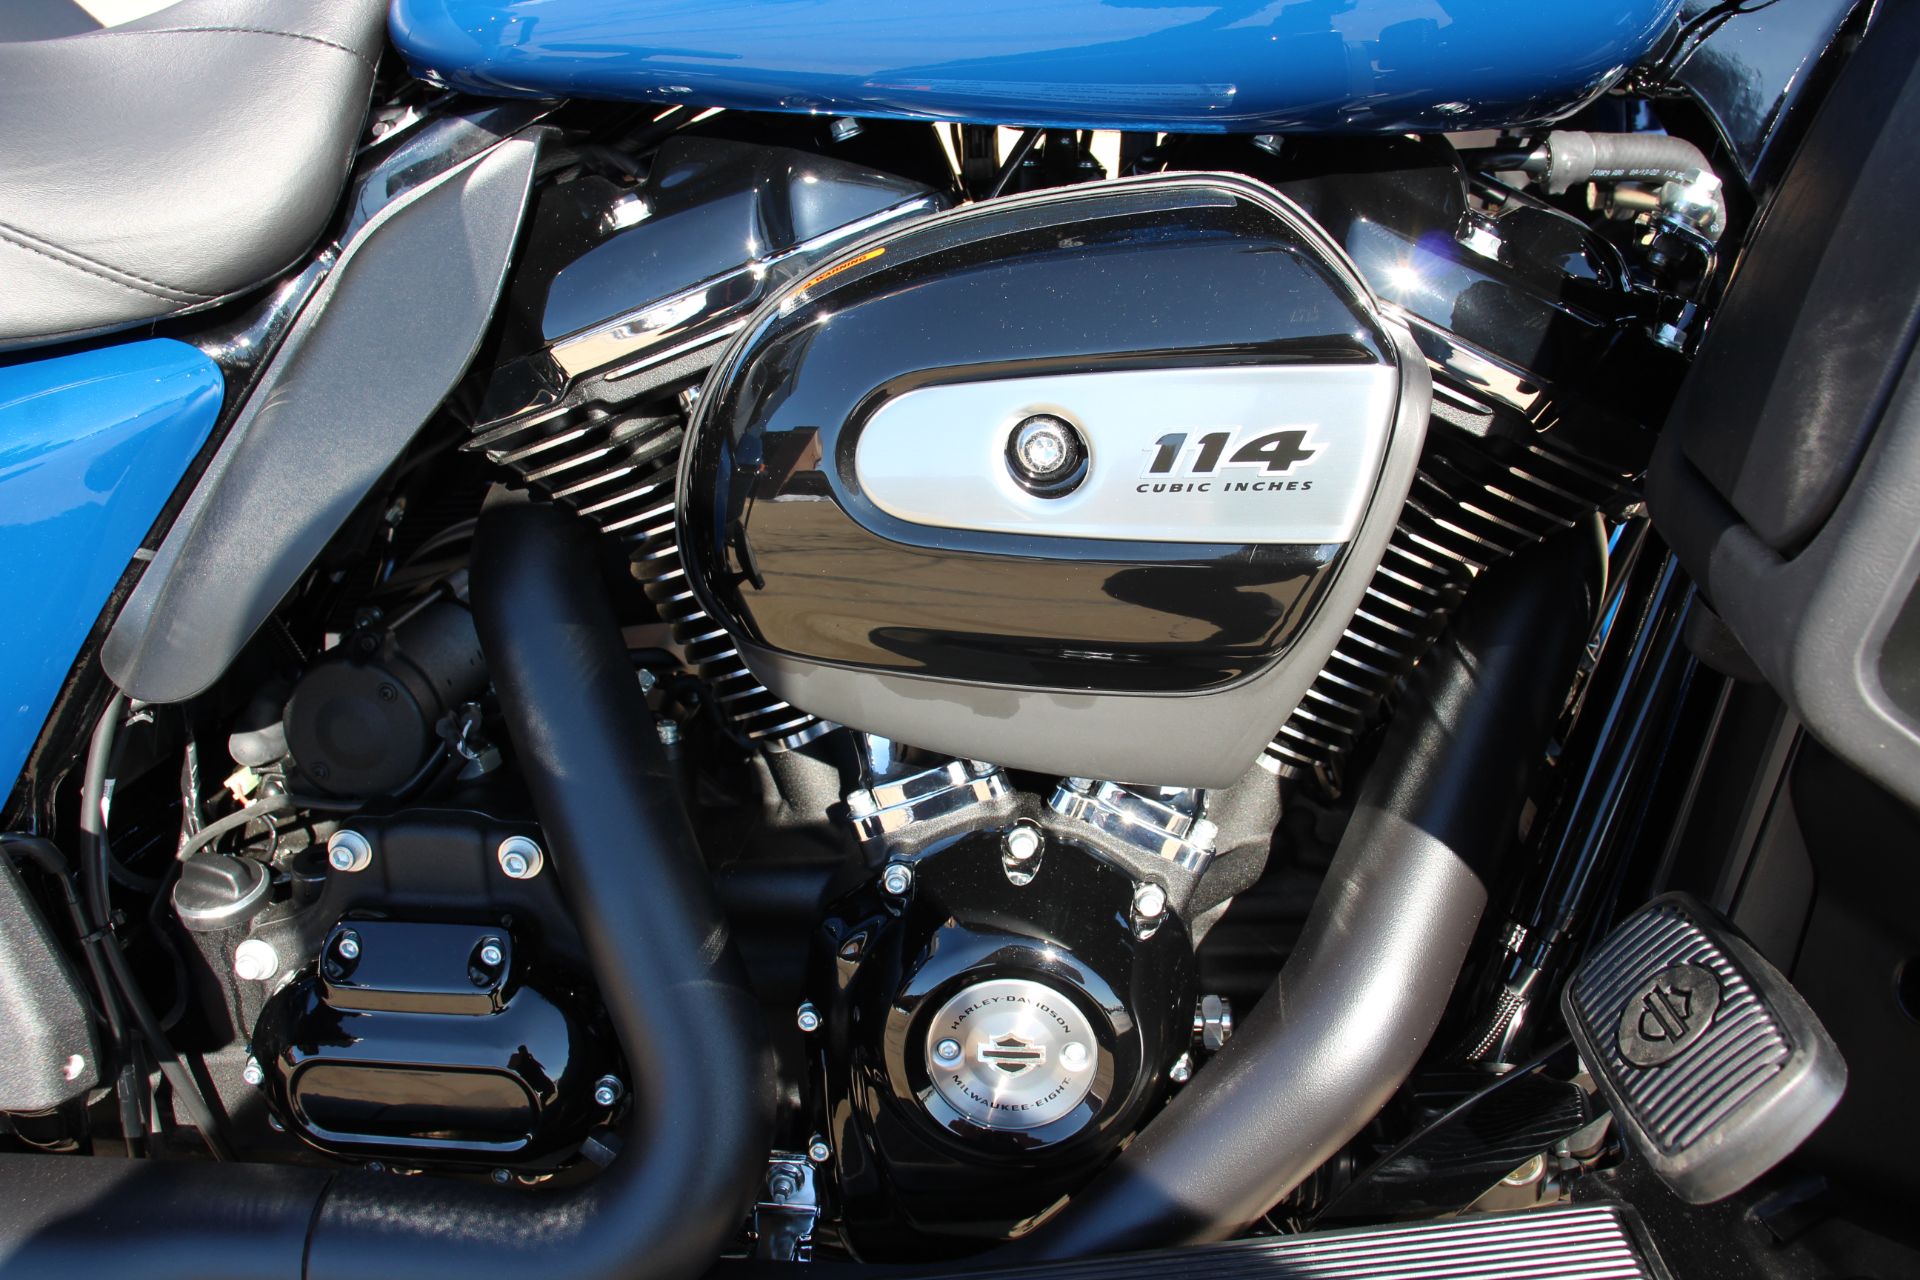 2023 Harley-Davidson Ultra Limited in Flint, Michigan - Photo 11